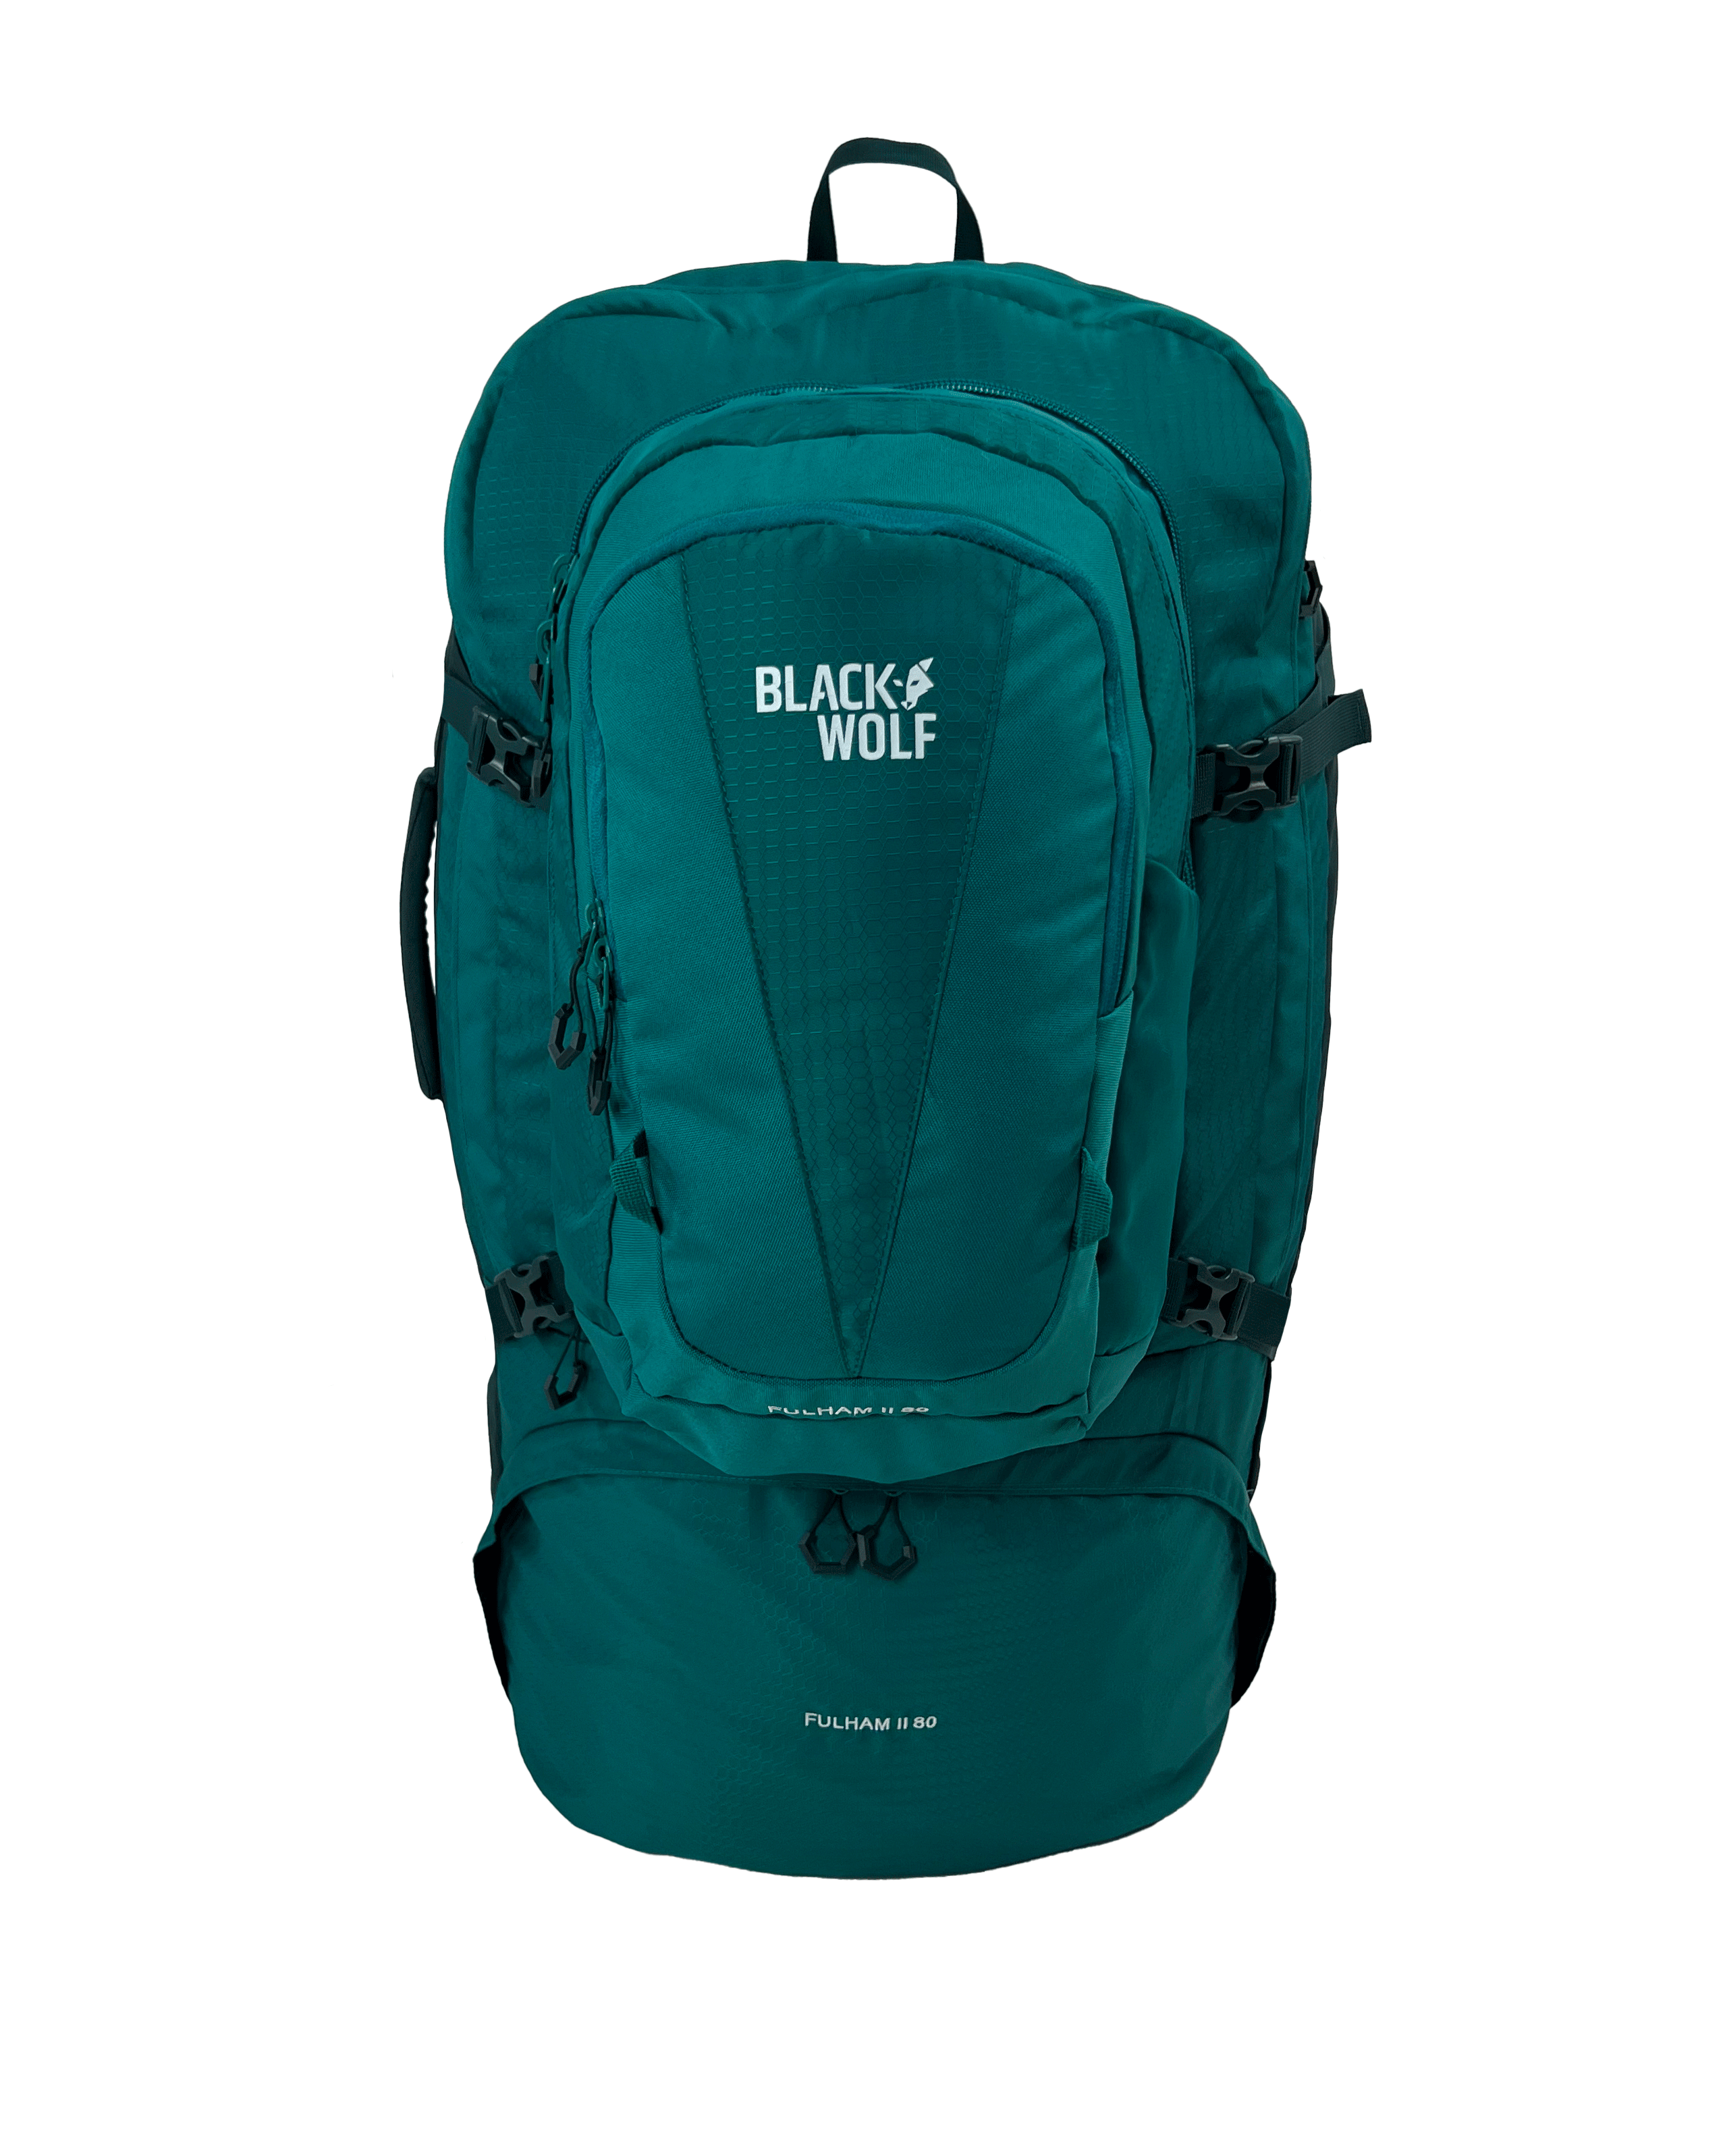 Black Wolf - Fulham II 60 Backpack - Quetzal Green/Sea Moss - 0